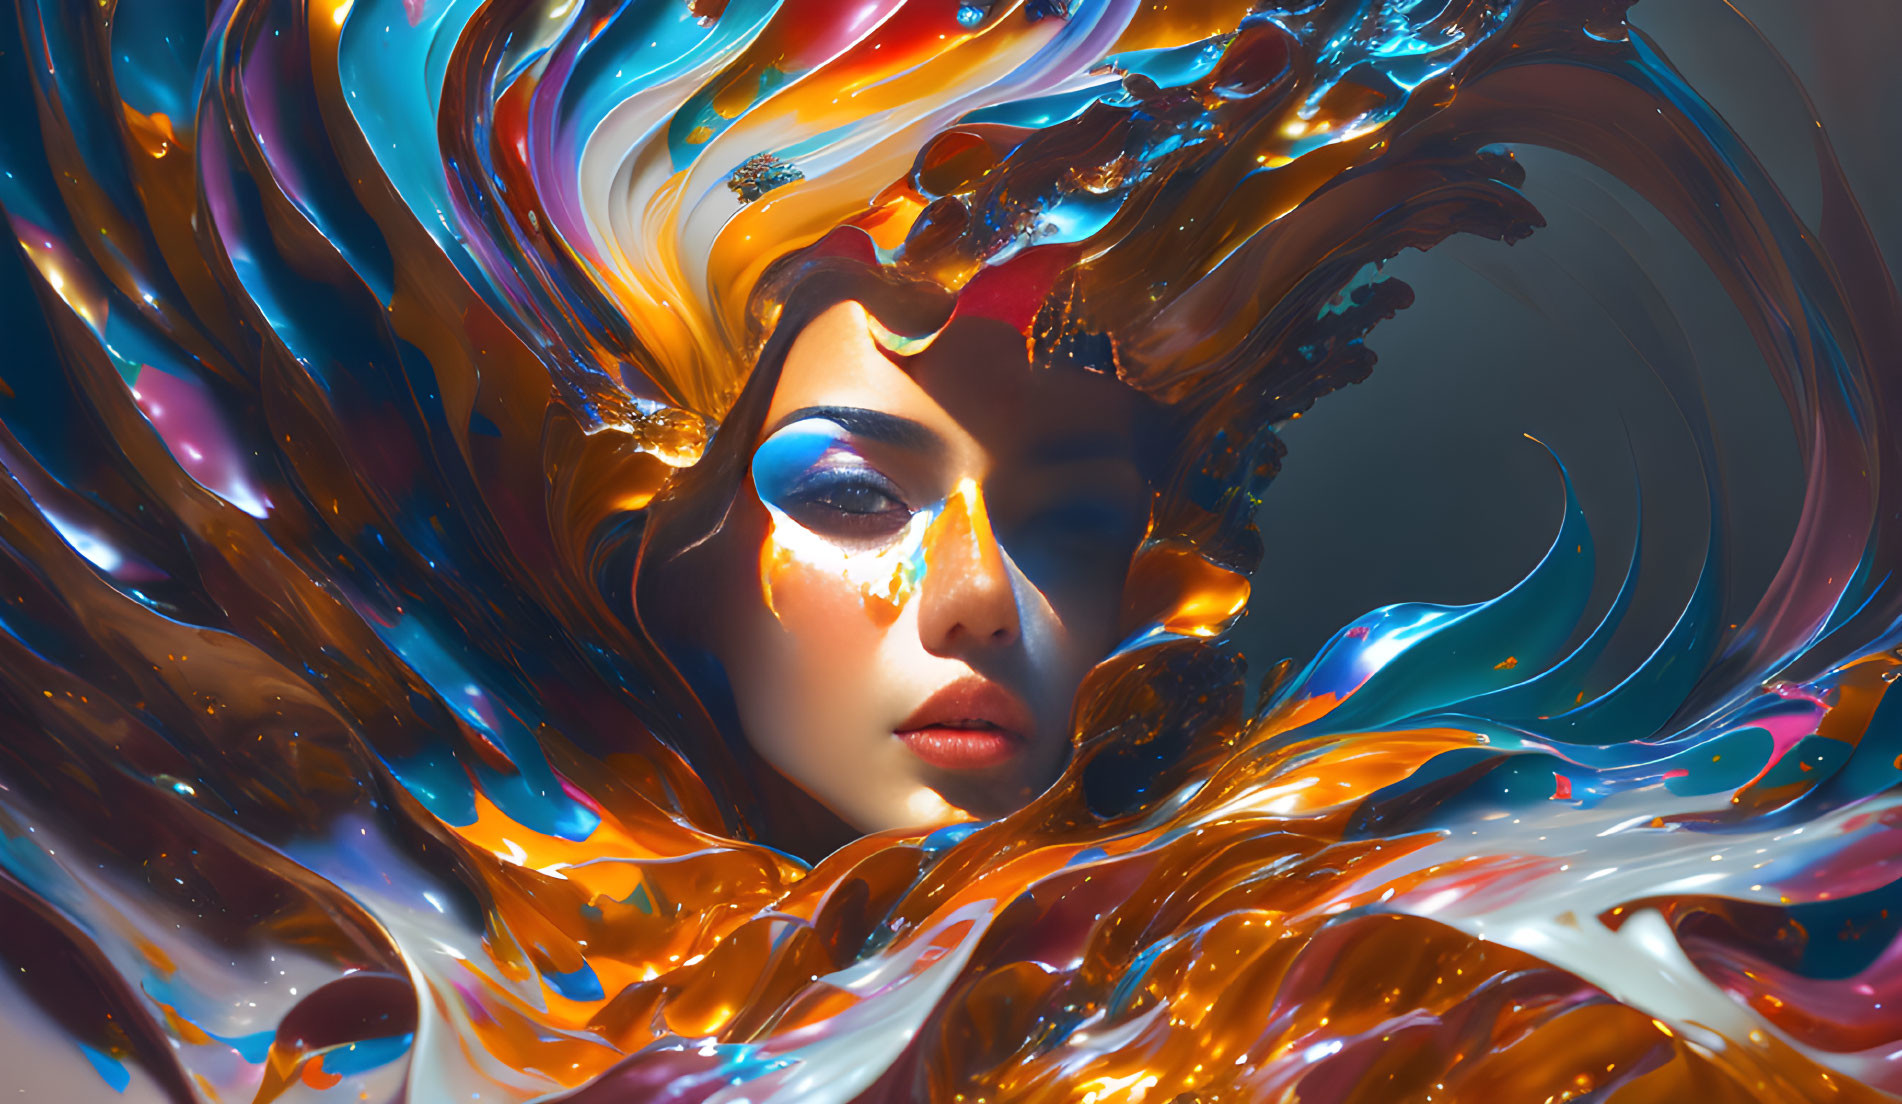 Vibrant surreal portrait of a woman in colorful liquid swirls